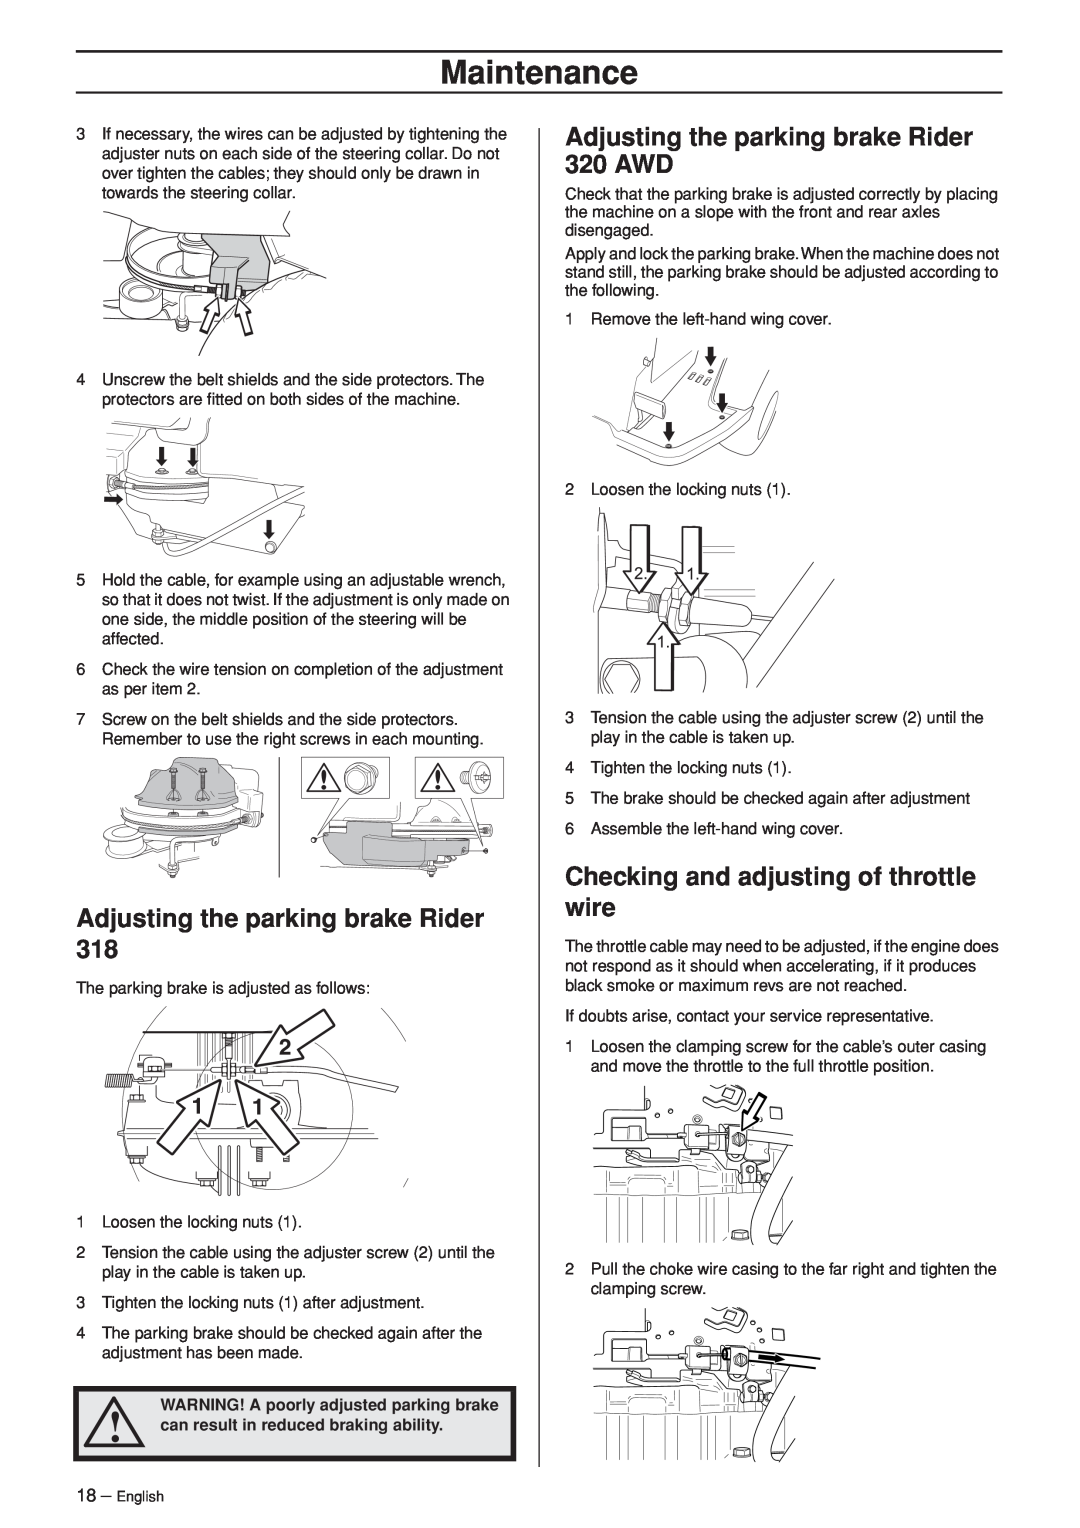 Husqvarna manual Adjusting the parking brake Rider 320 AWD, Checking and adjusting of throttle wire, Maintenance 